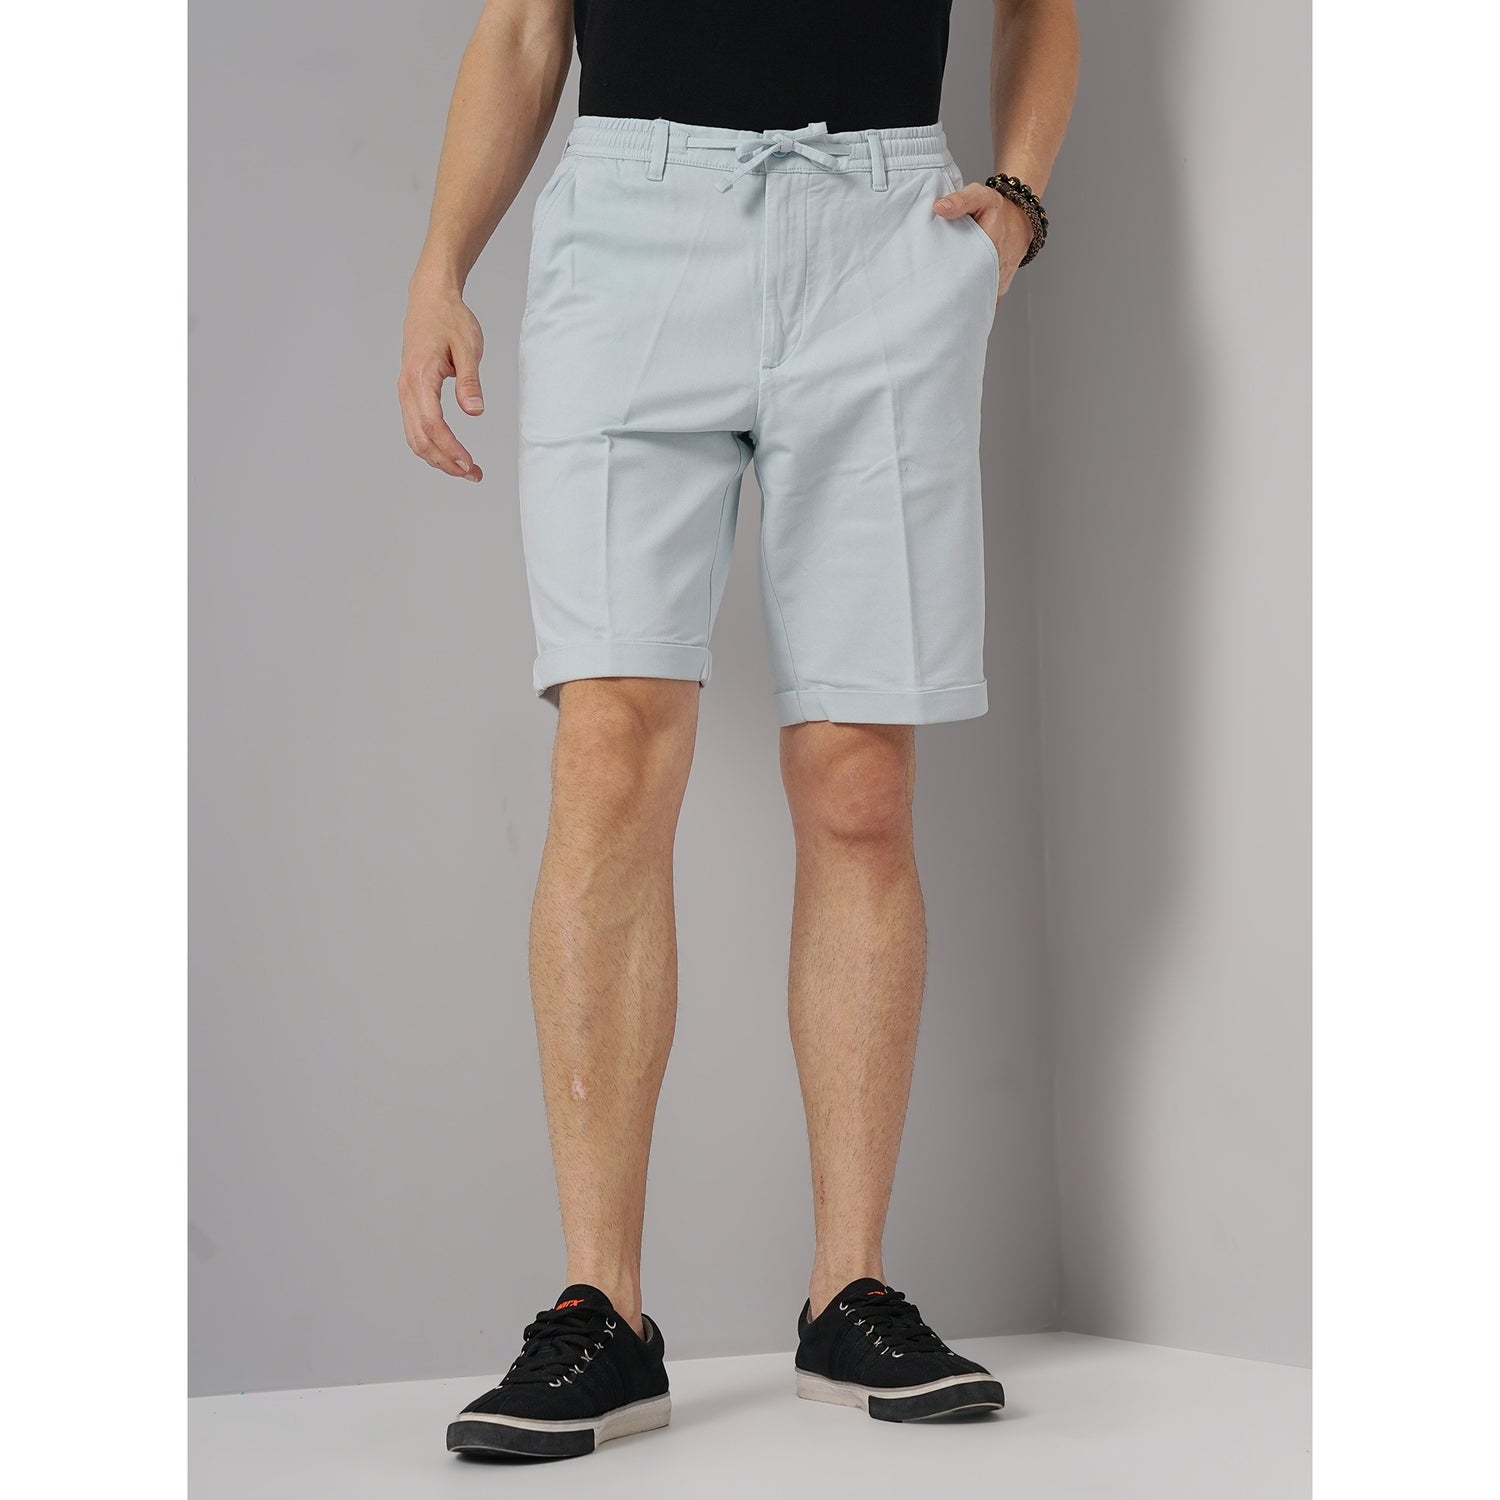 Men Blue Solid Loose Fit Cotton Cargo Casual Shorts (GOBELLOBM)